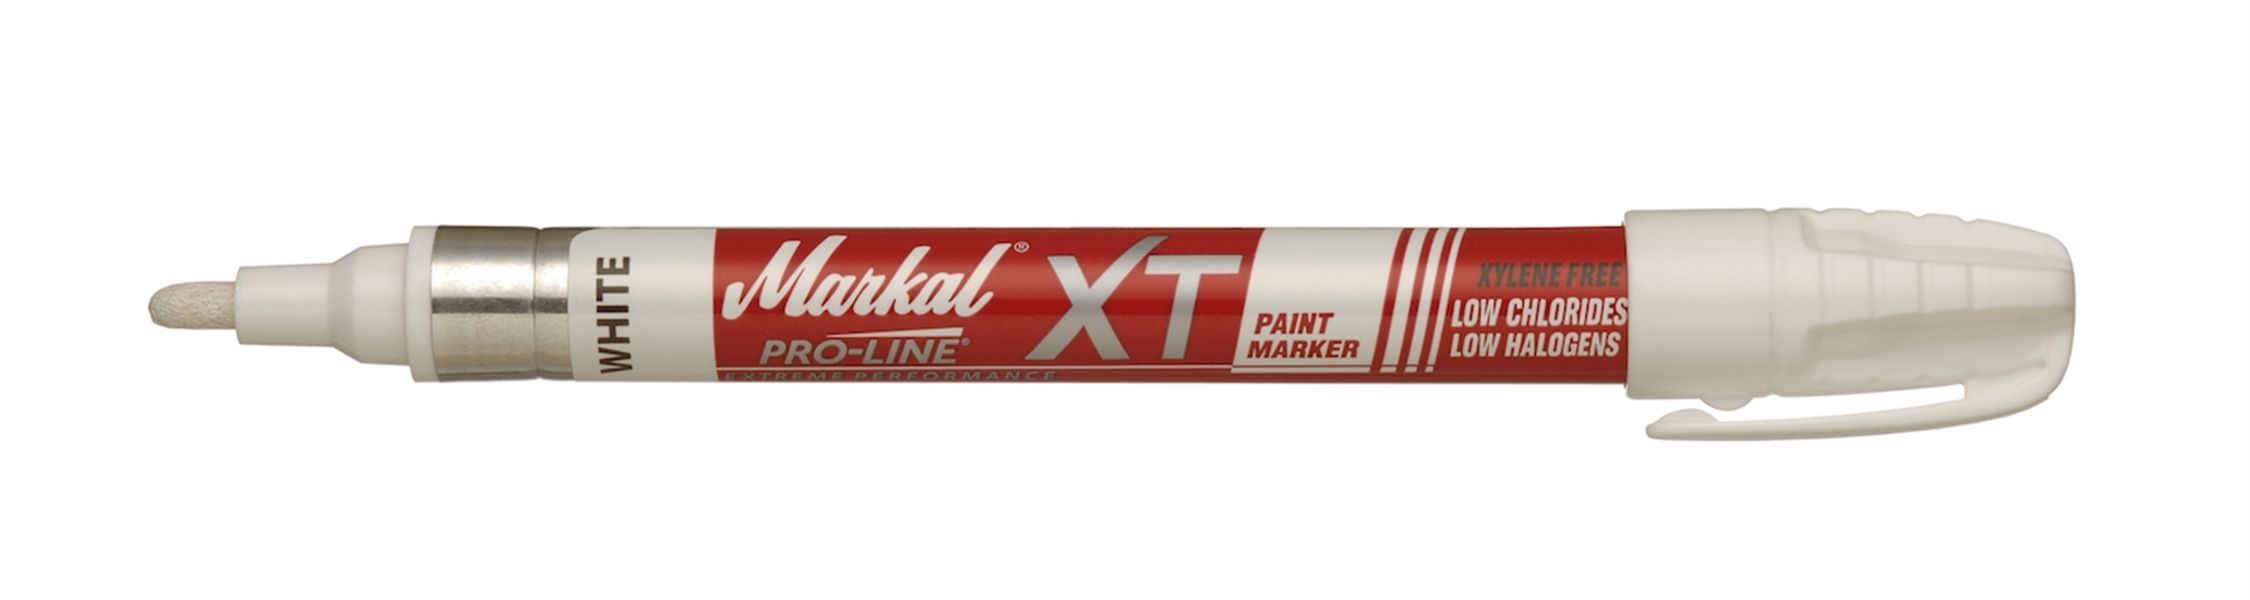 Markal Pro-line XT white